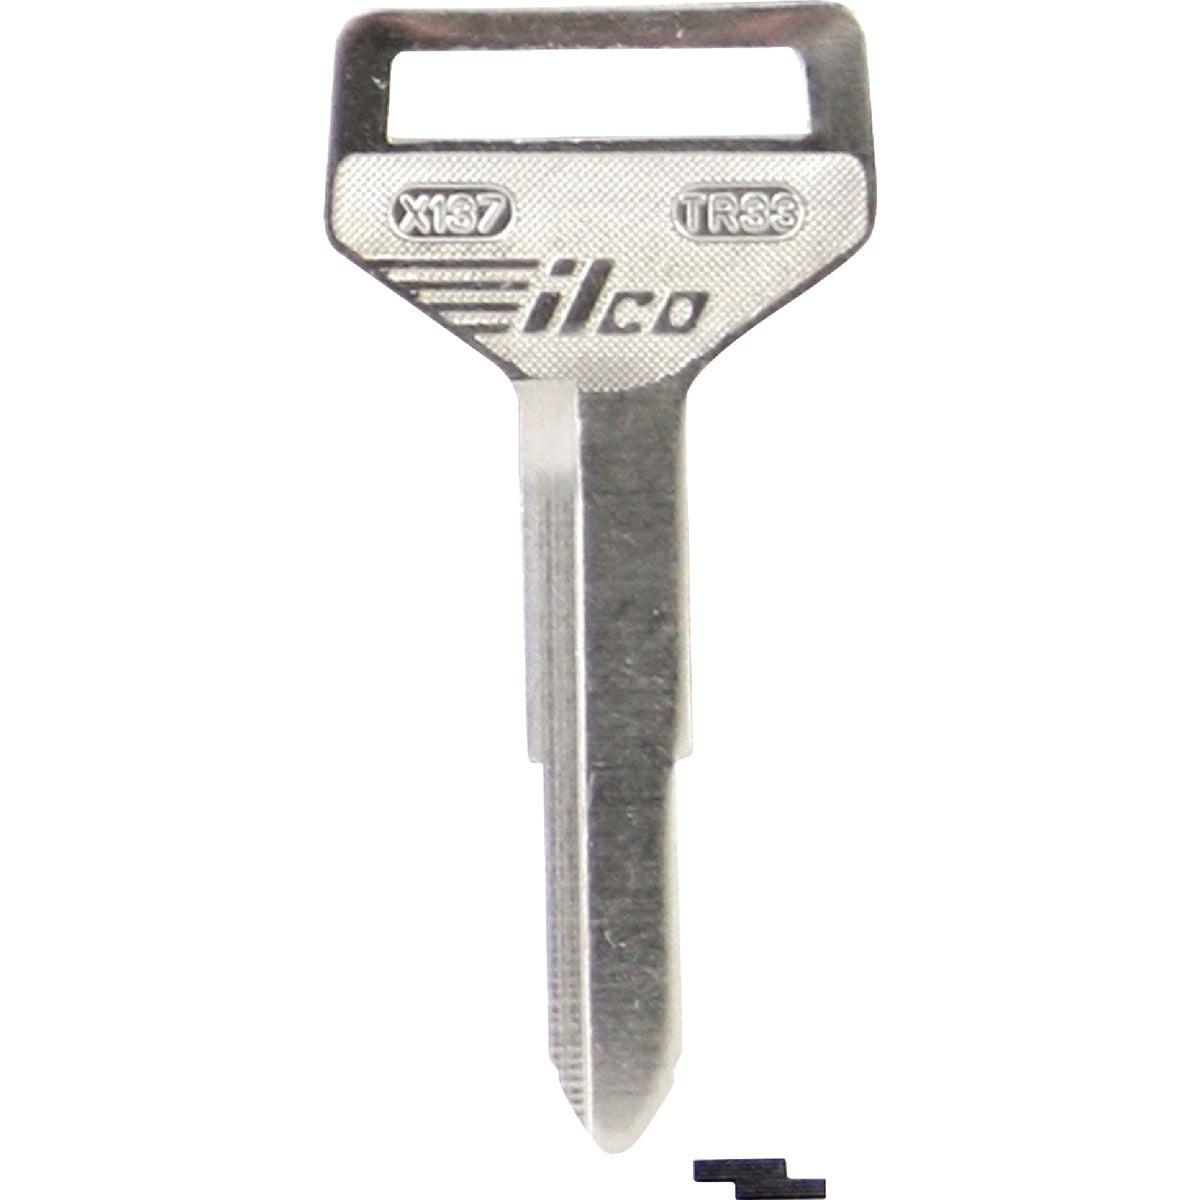 ILCO Toyota Nickel Plated Automotive Key, TR37 / X159 (10-Pack)